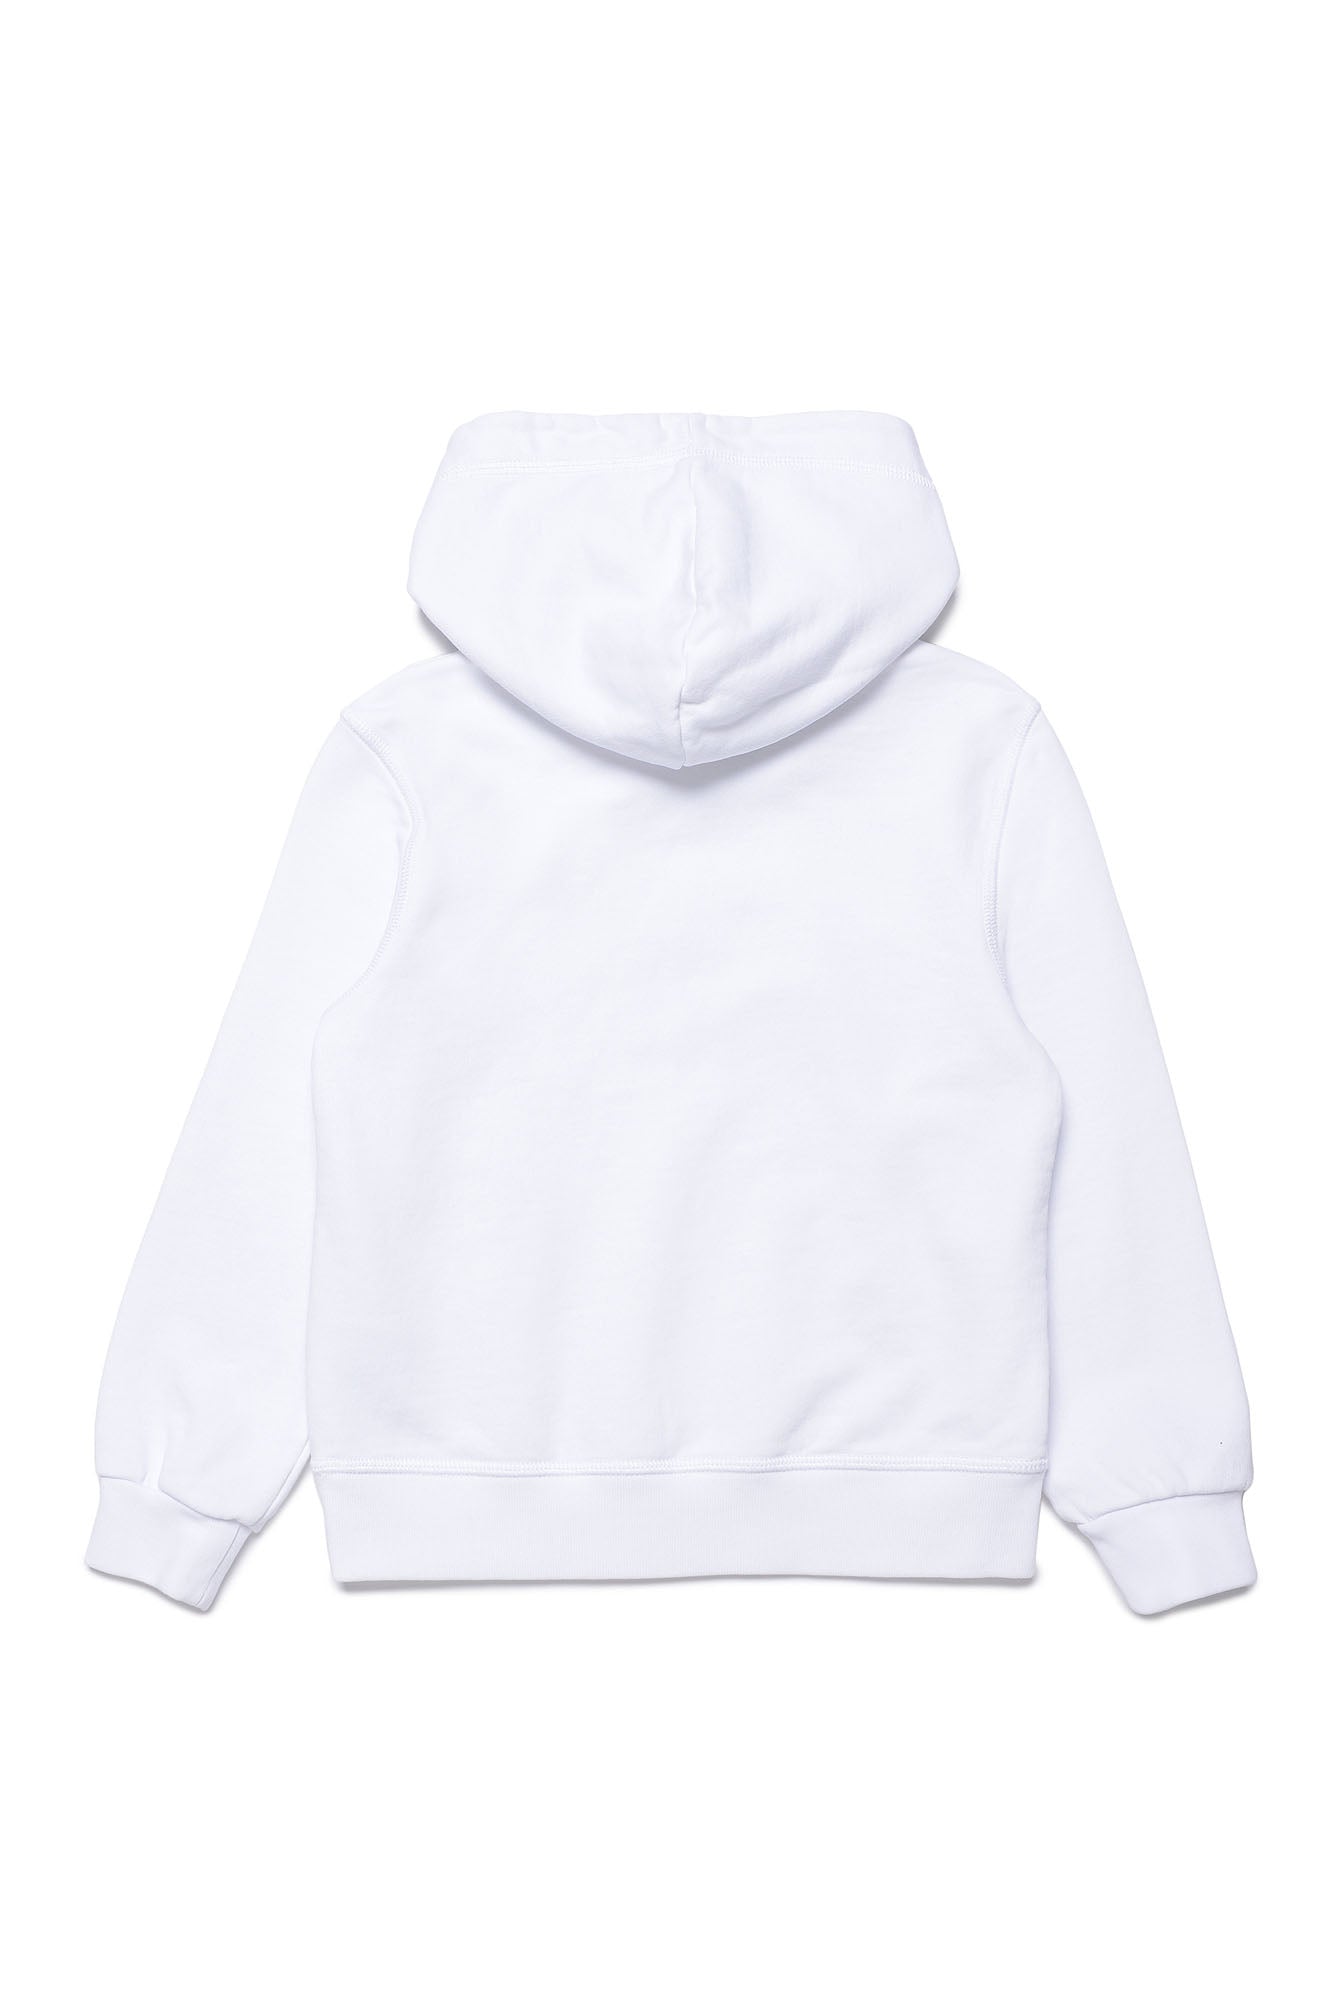 Dsquared2 Unisex Child Sweatshirt DQ049V D002Y White